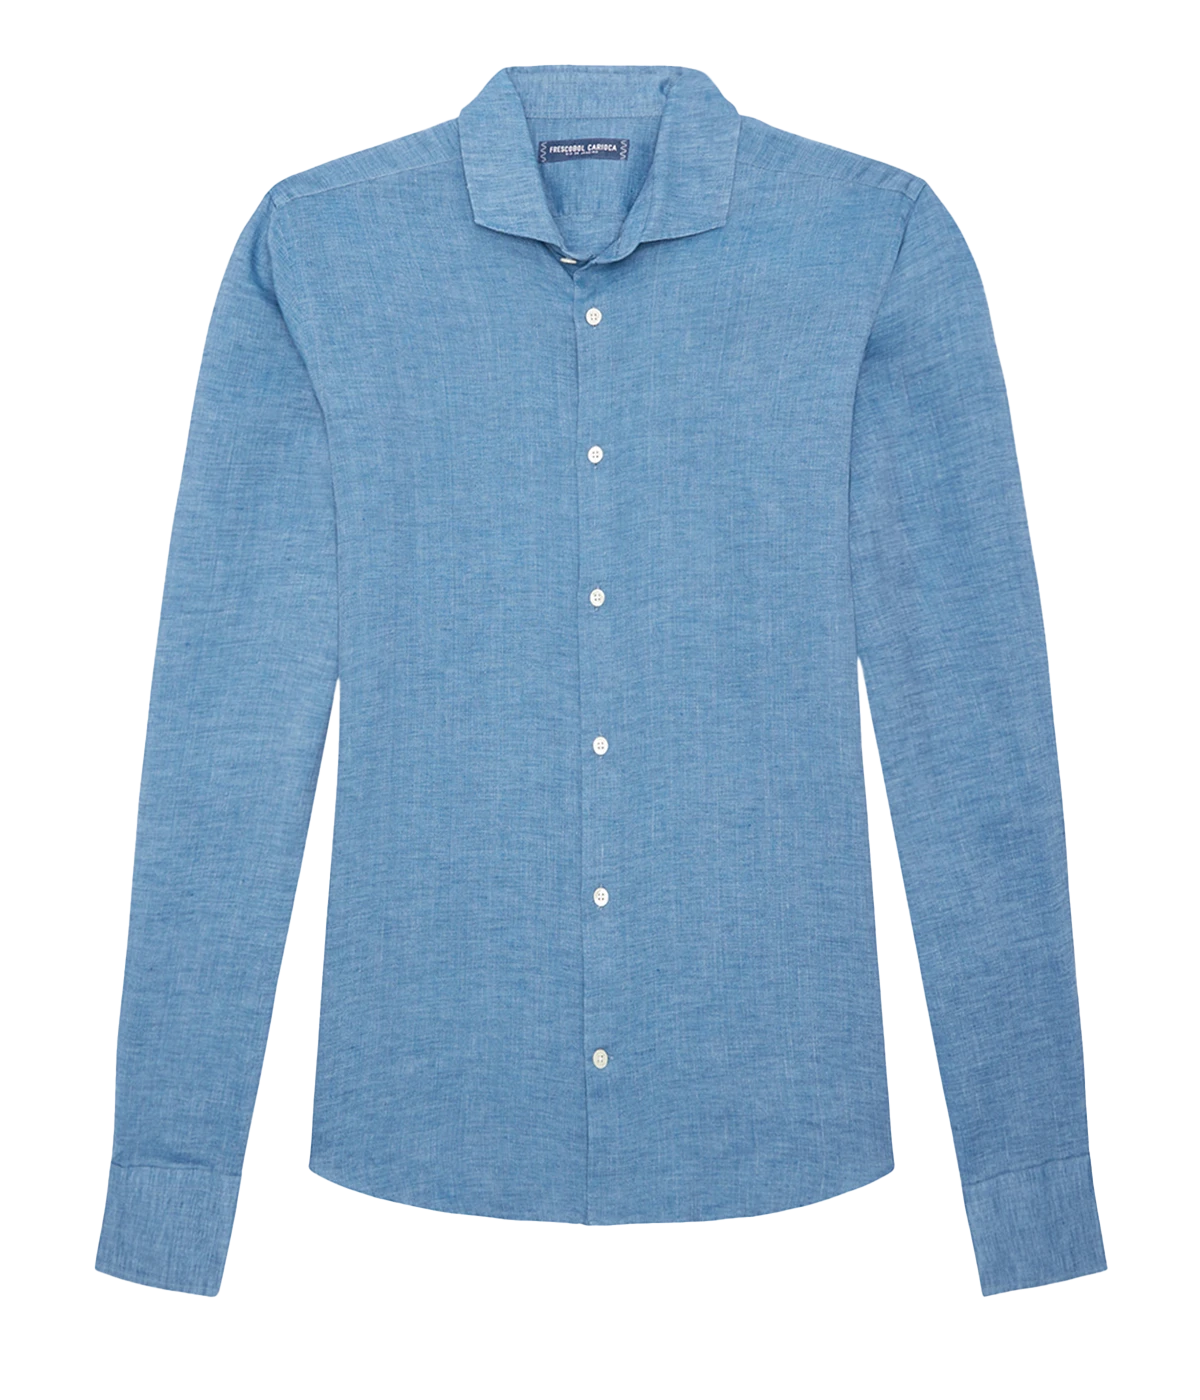 Antonio Linen Long Sleeve Shirt in Cloud Blue